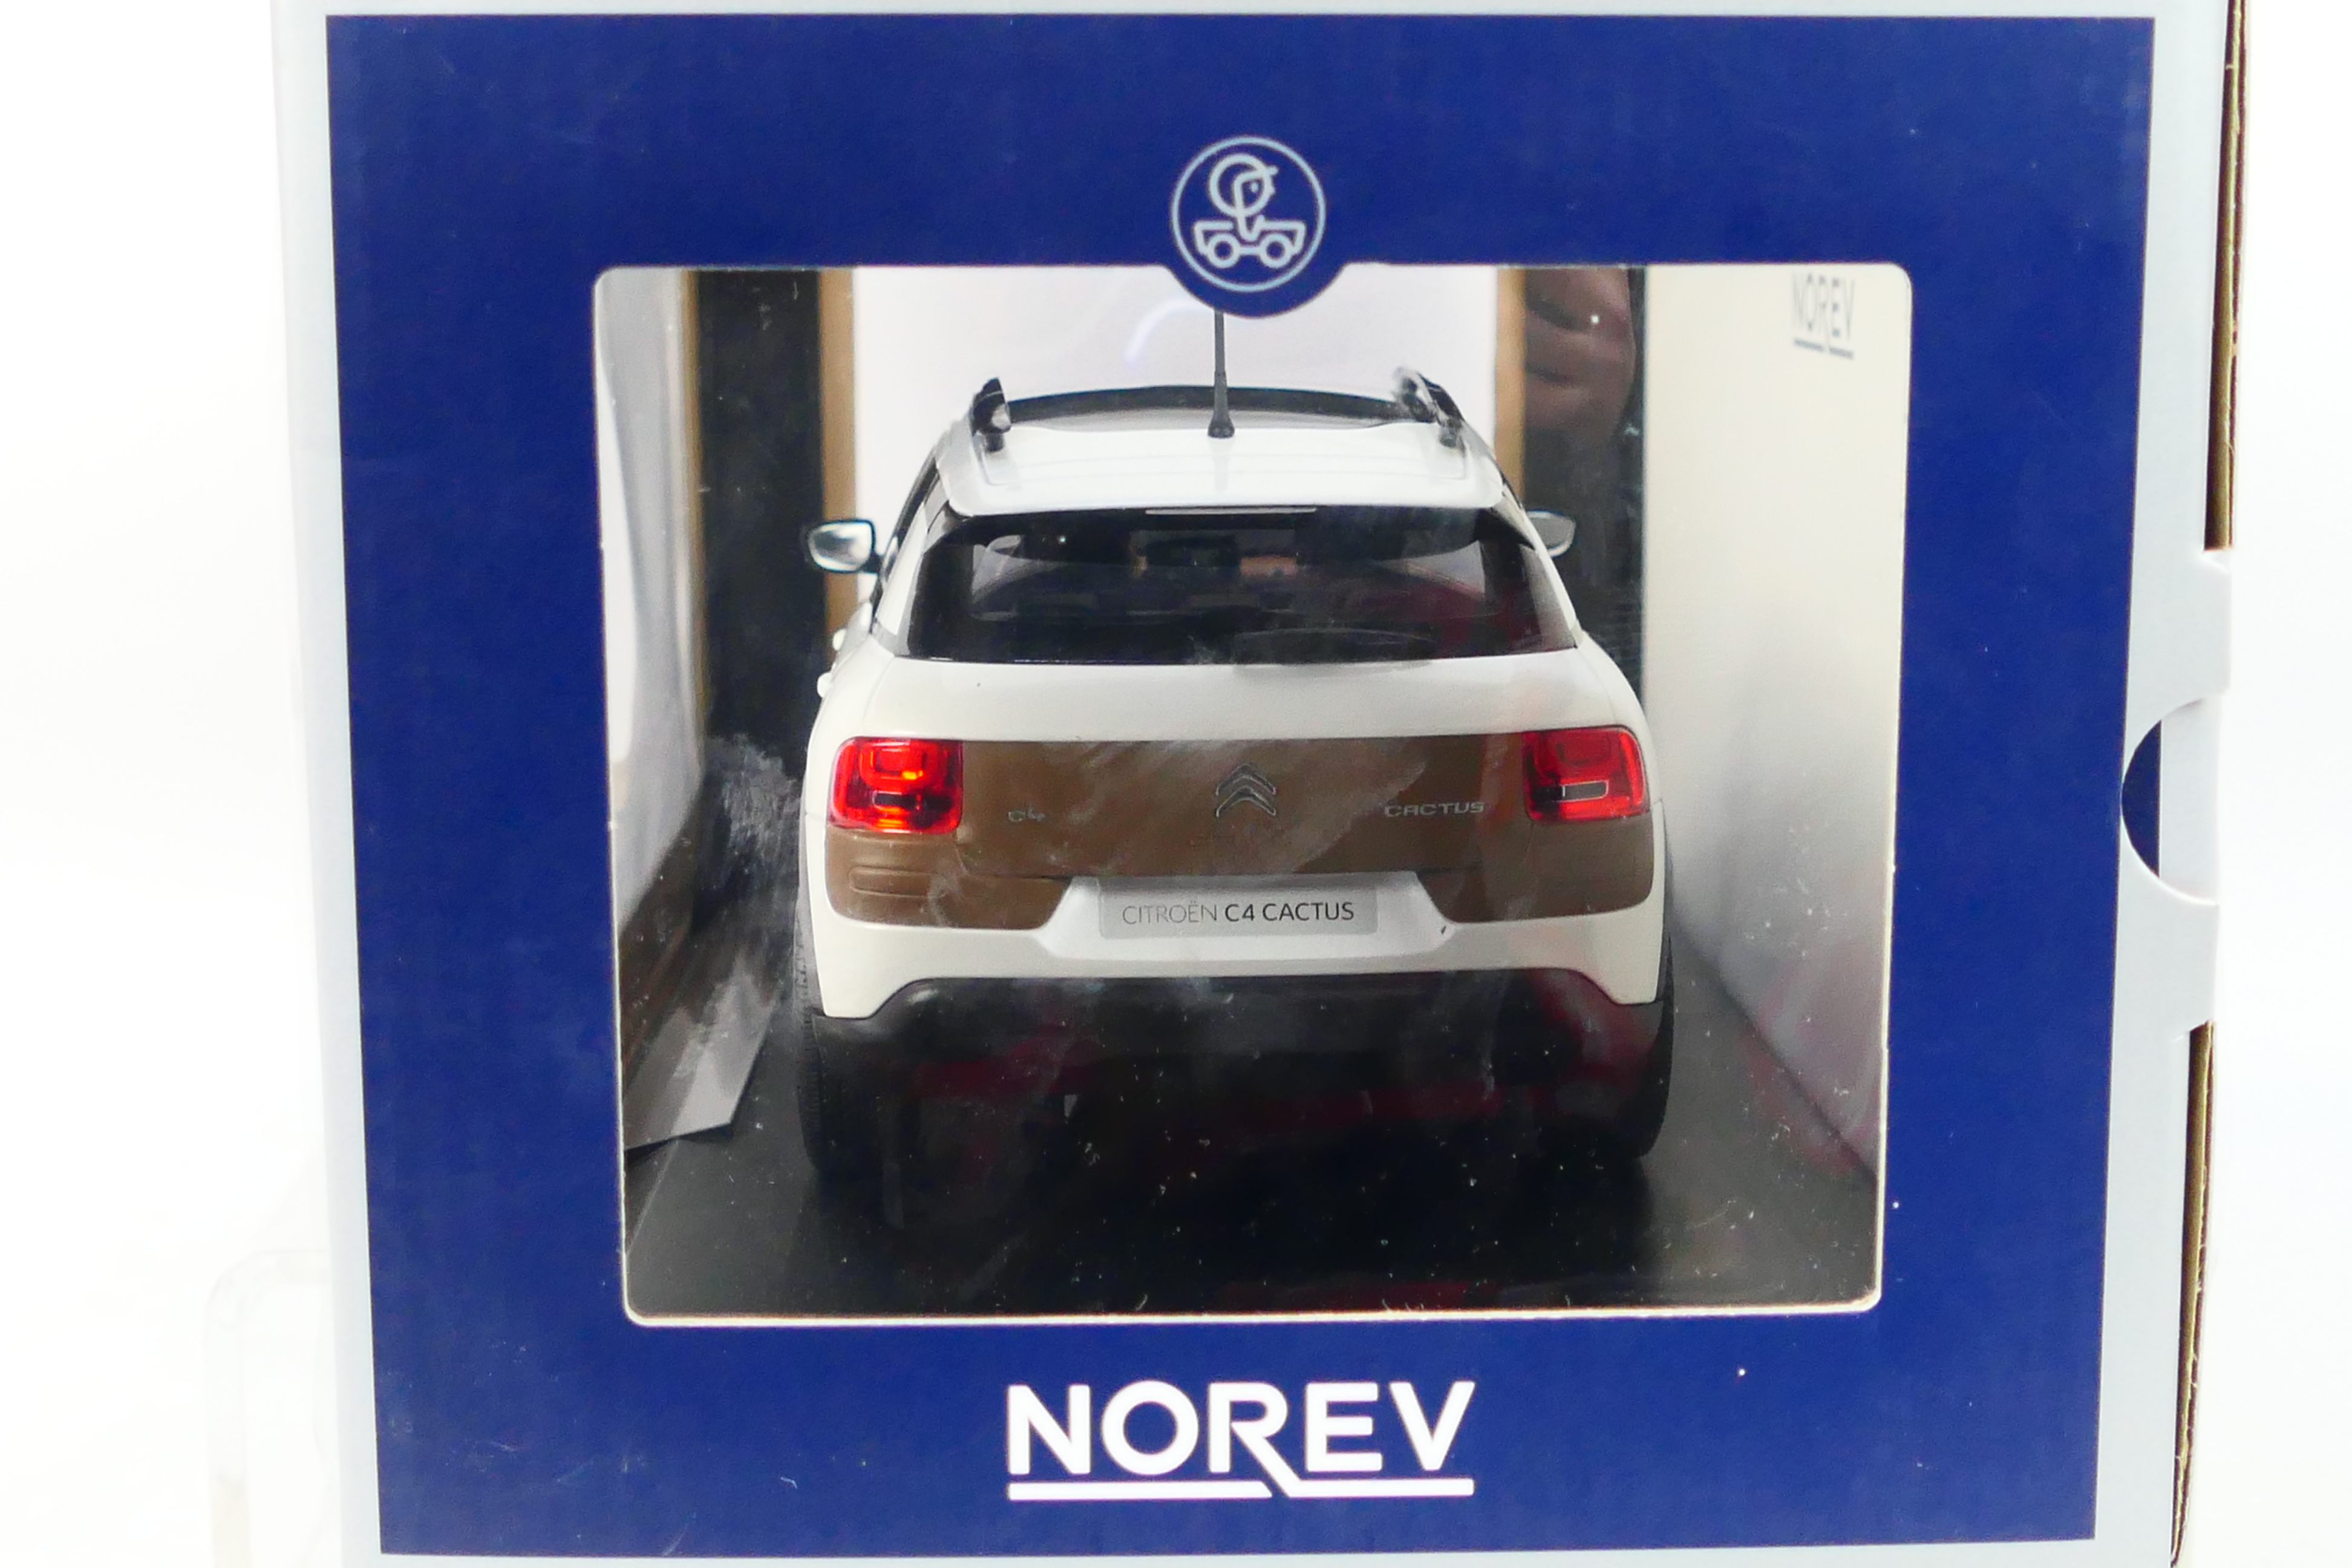 Norev - A boxed 1:18 scale Norev #181651 Citroen C4 Cactus 2014. - Image 4 of 4